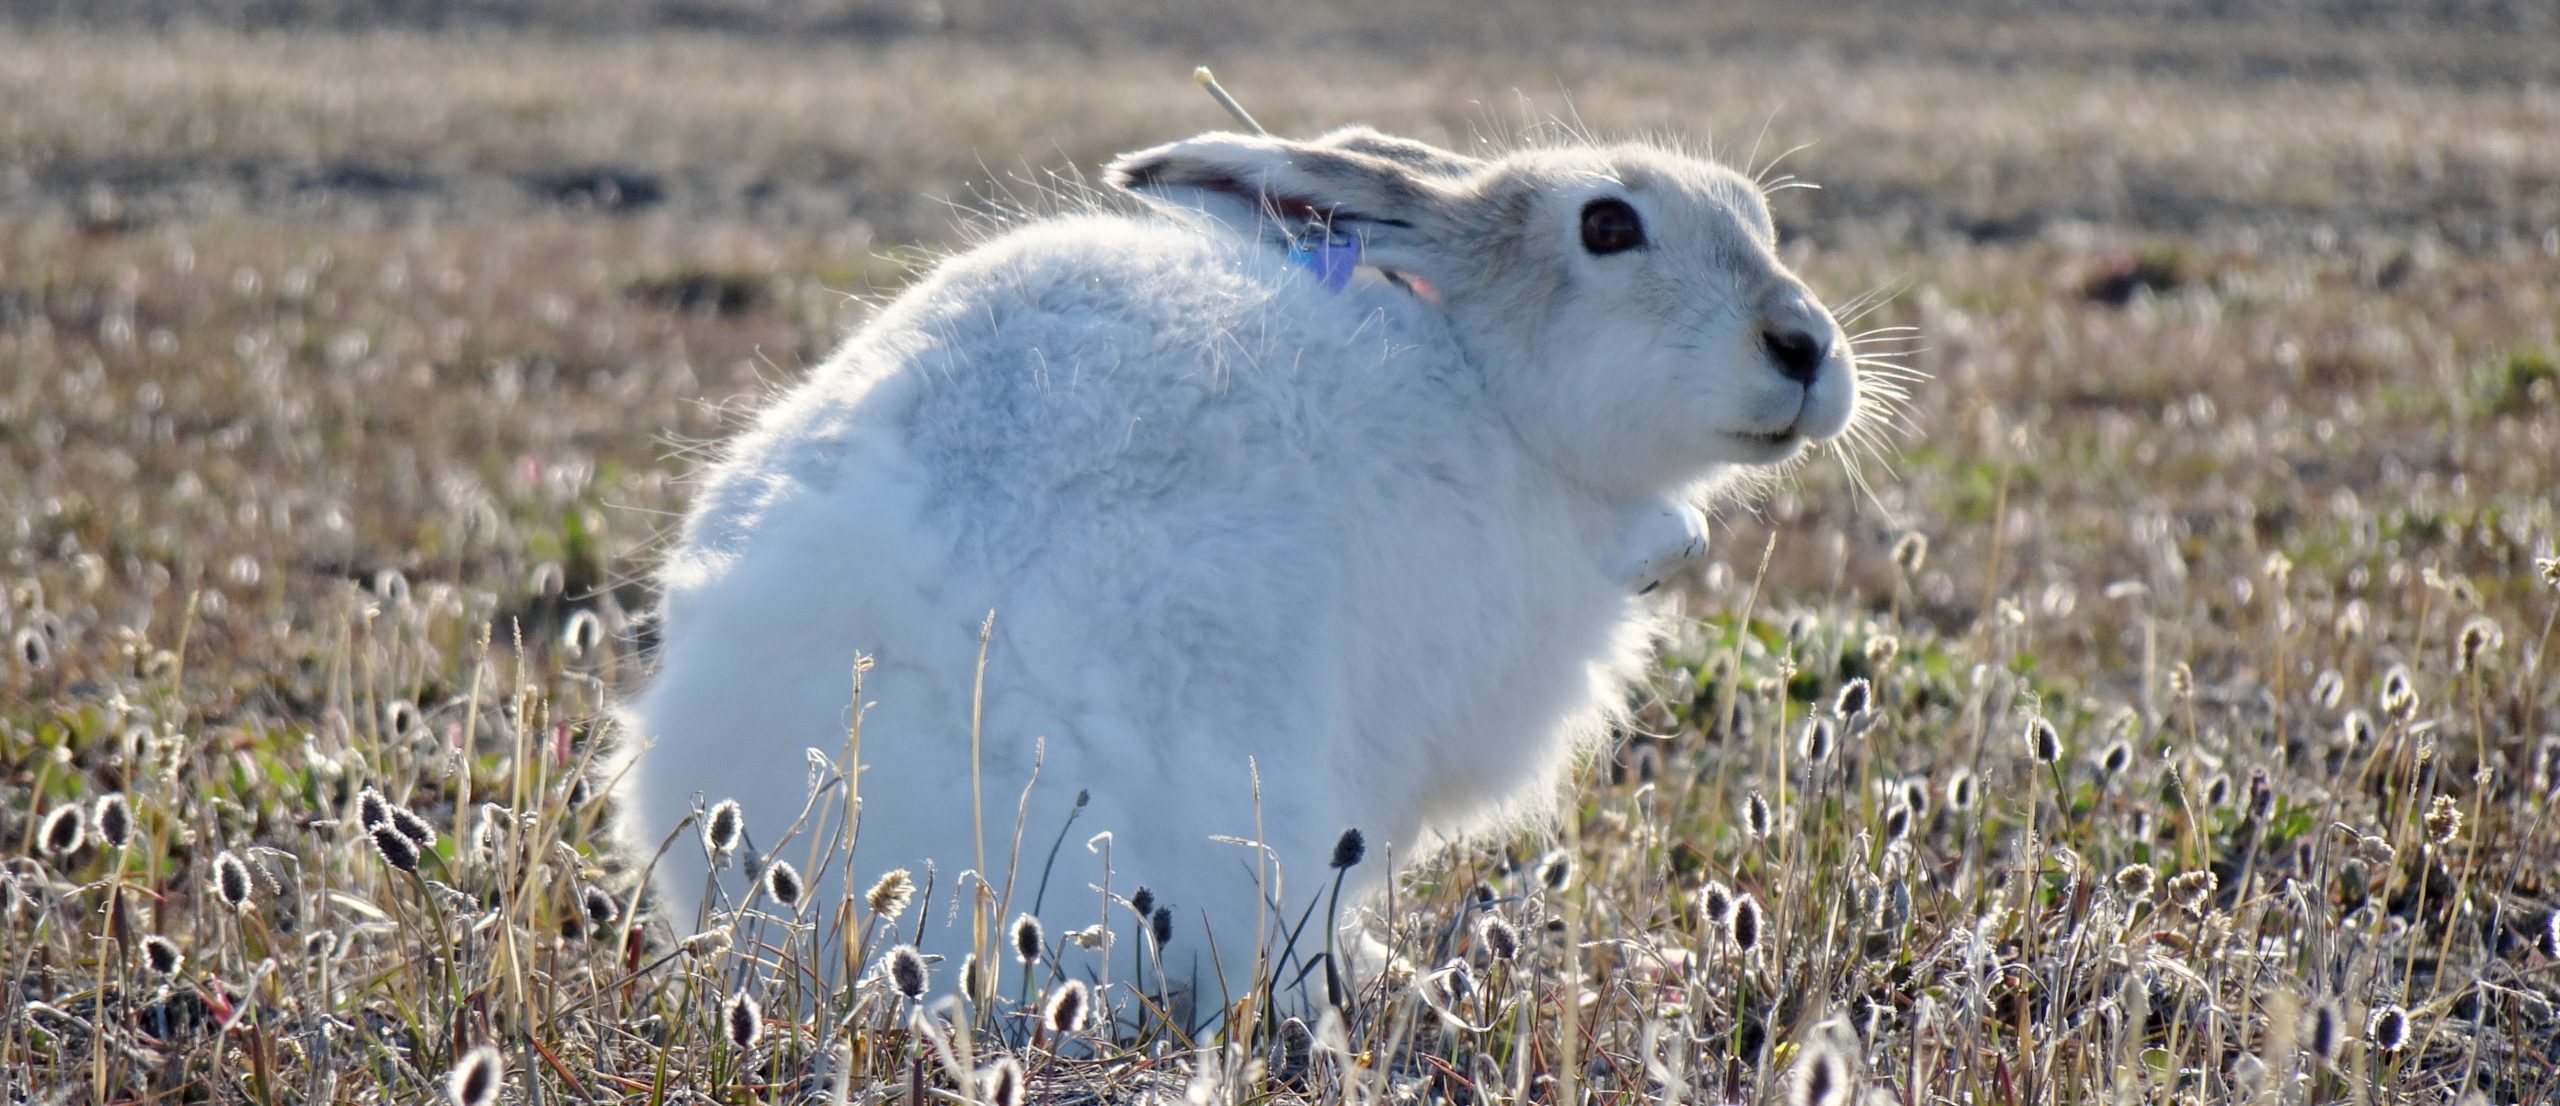 An arctic hare with an Argos PTT